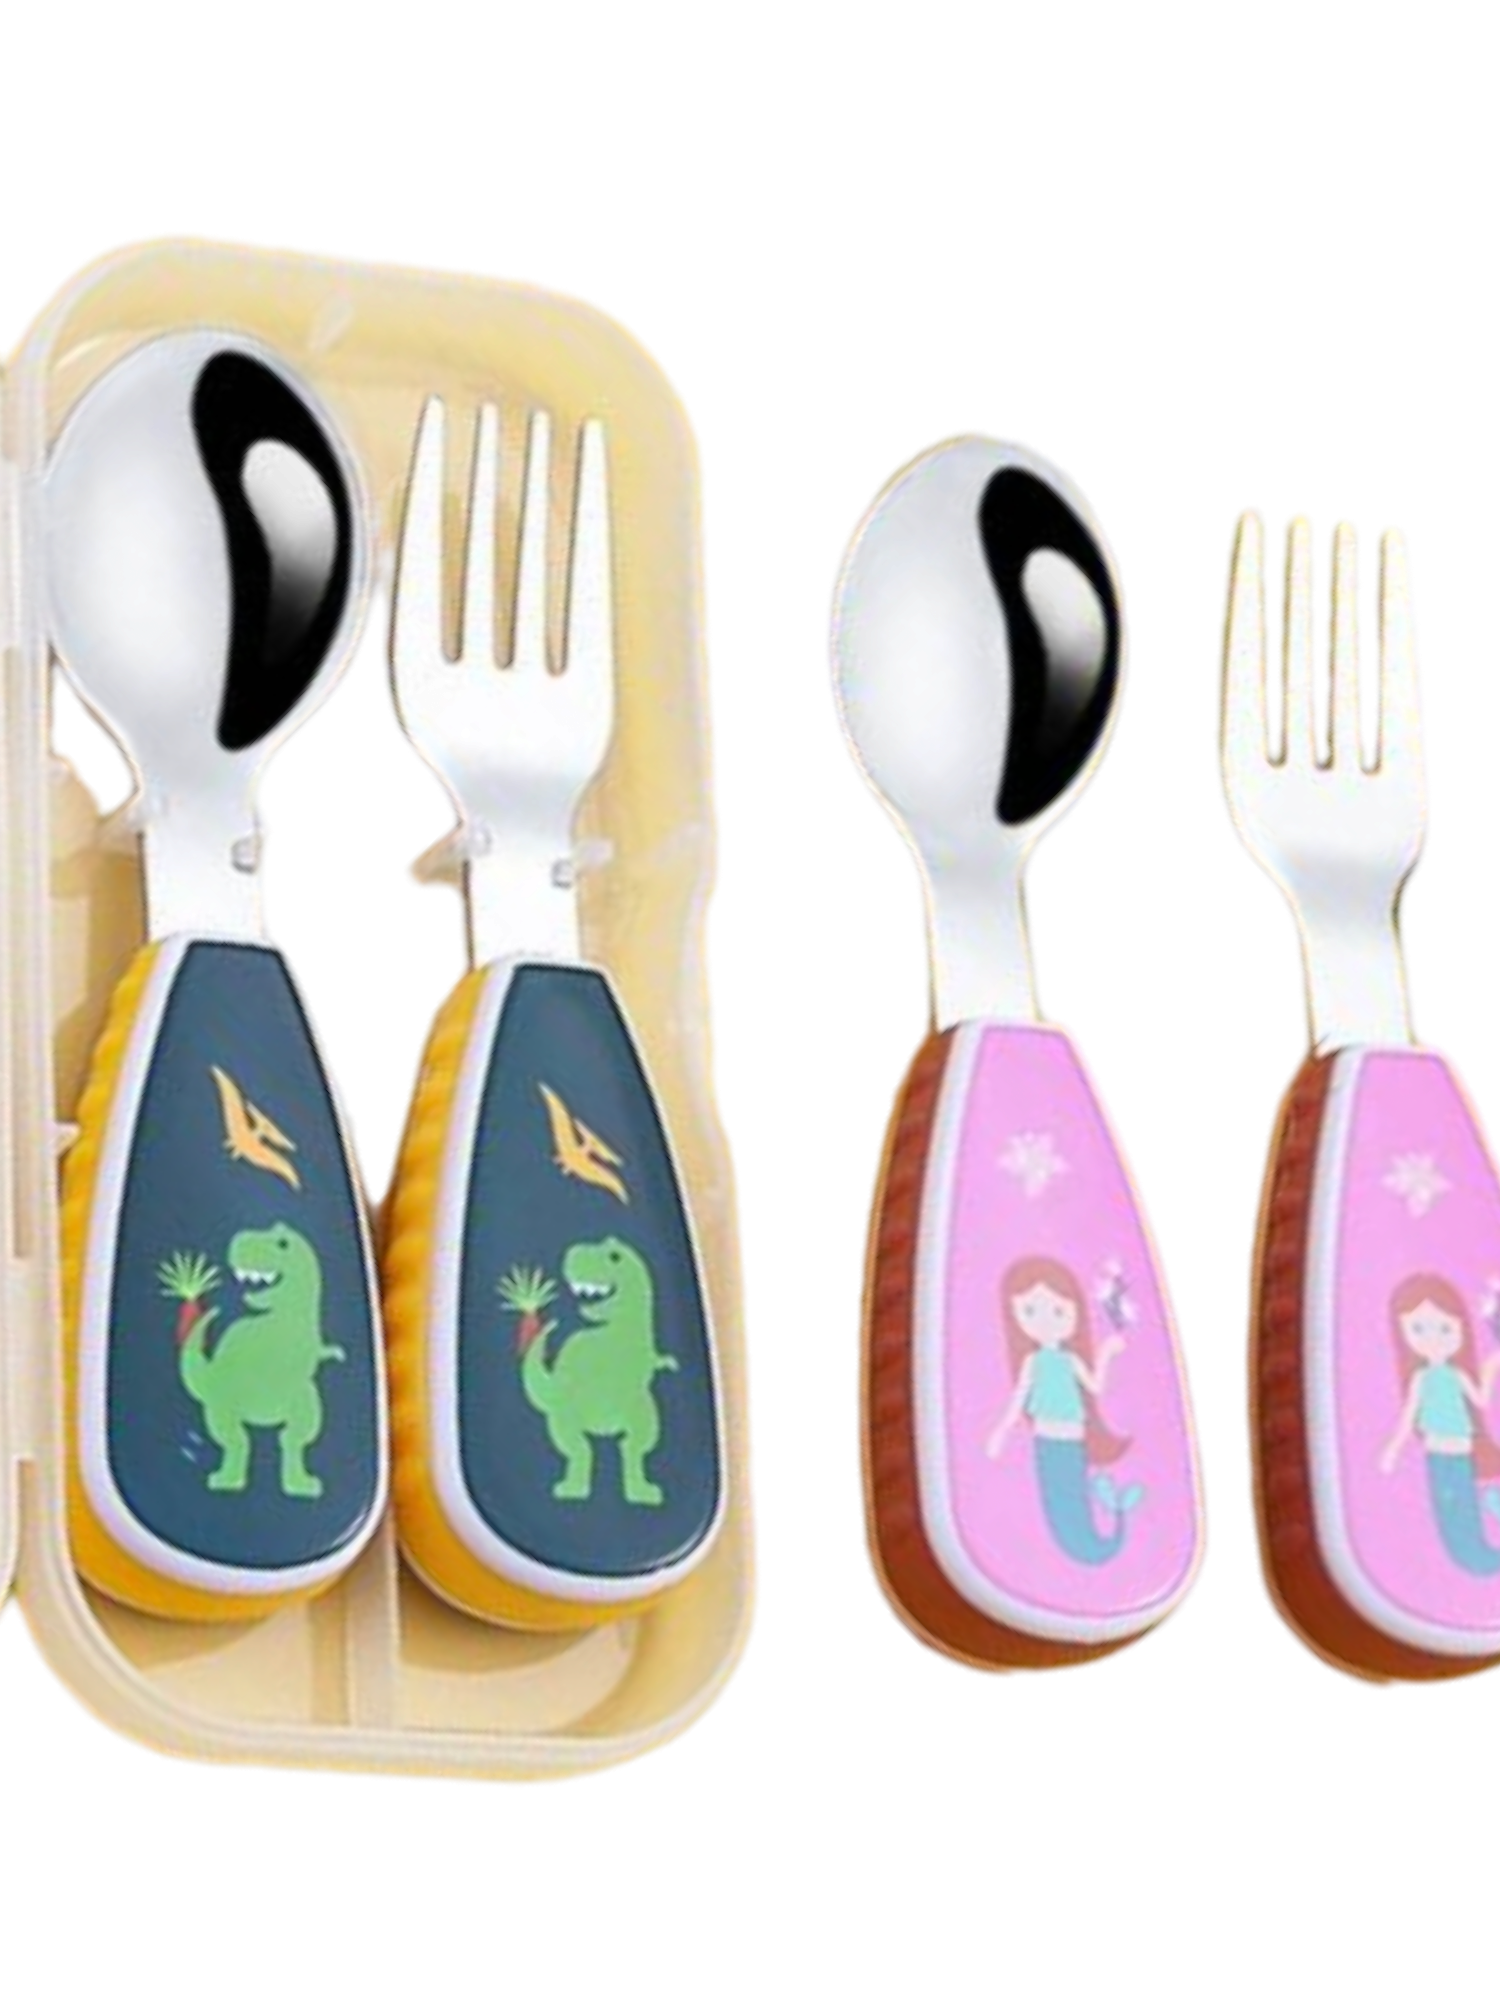 MINIME Cartoon Stainless Steel Spoon & Fork Set